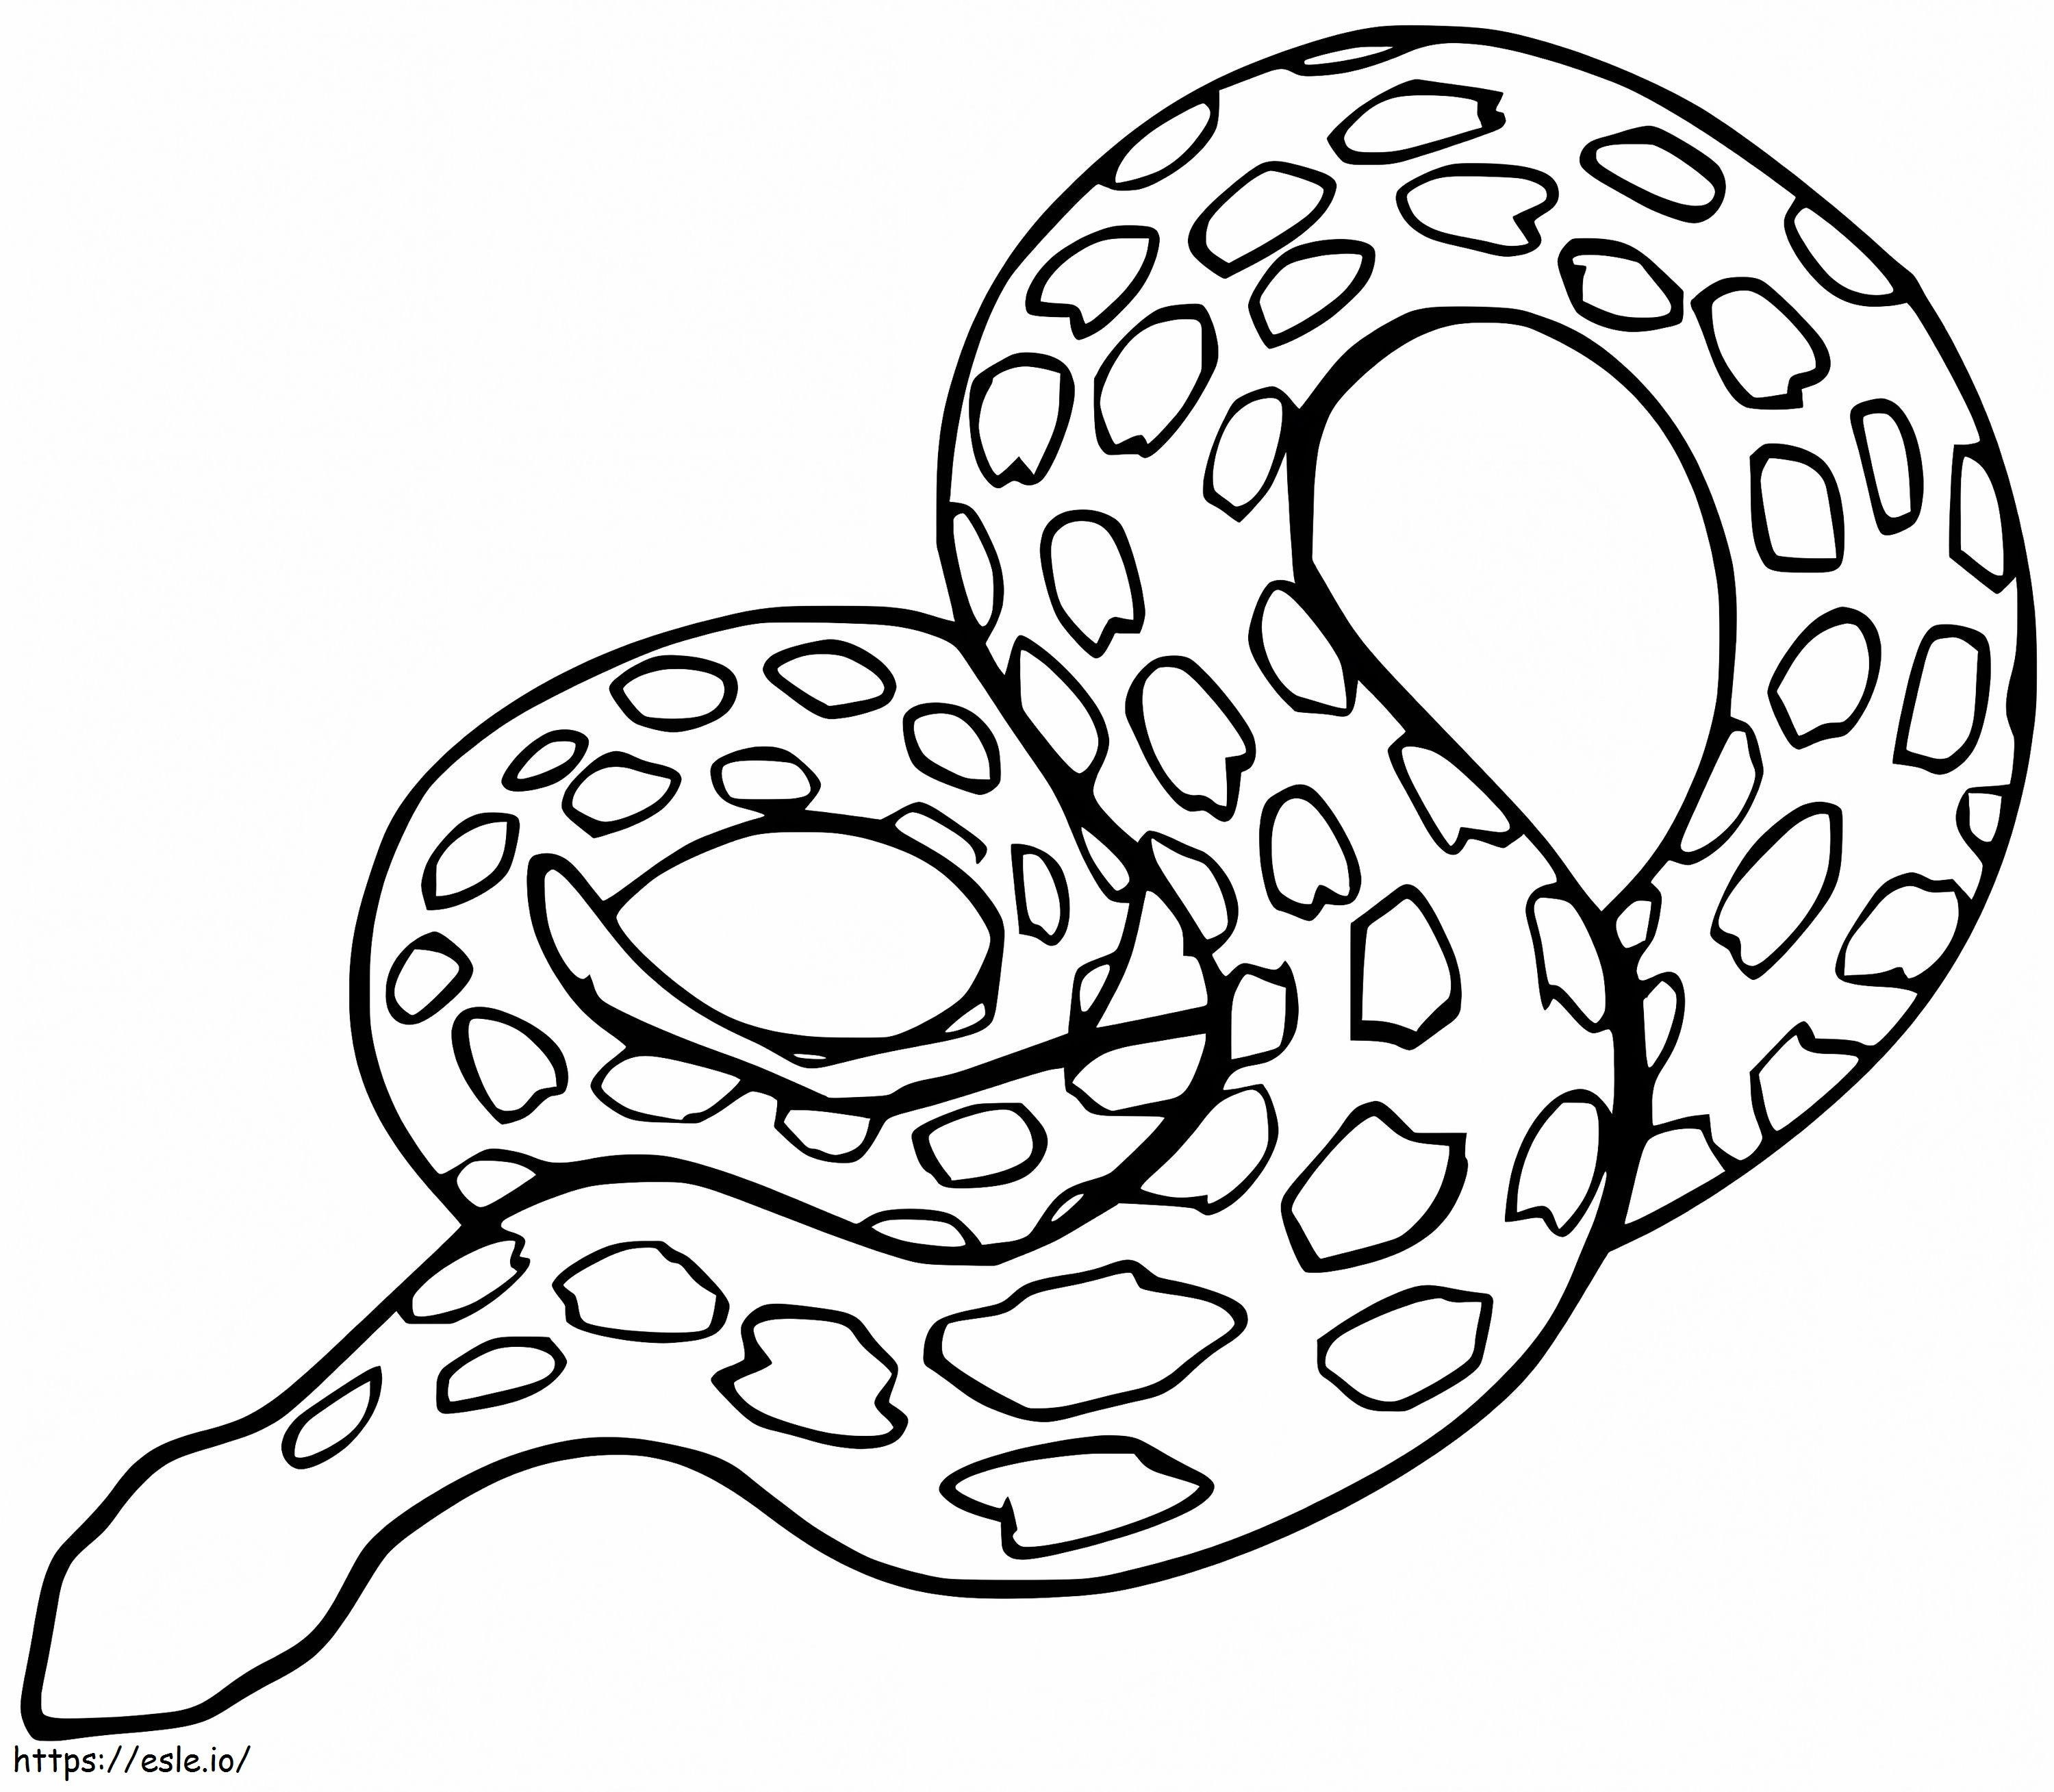 Coloriage Anaconda facile à imprimer dessin